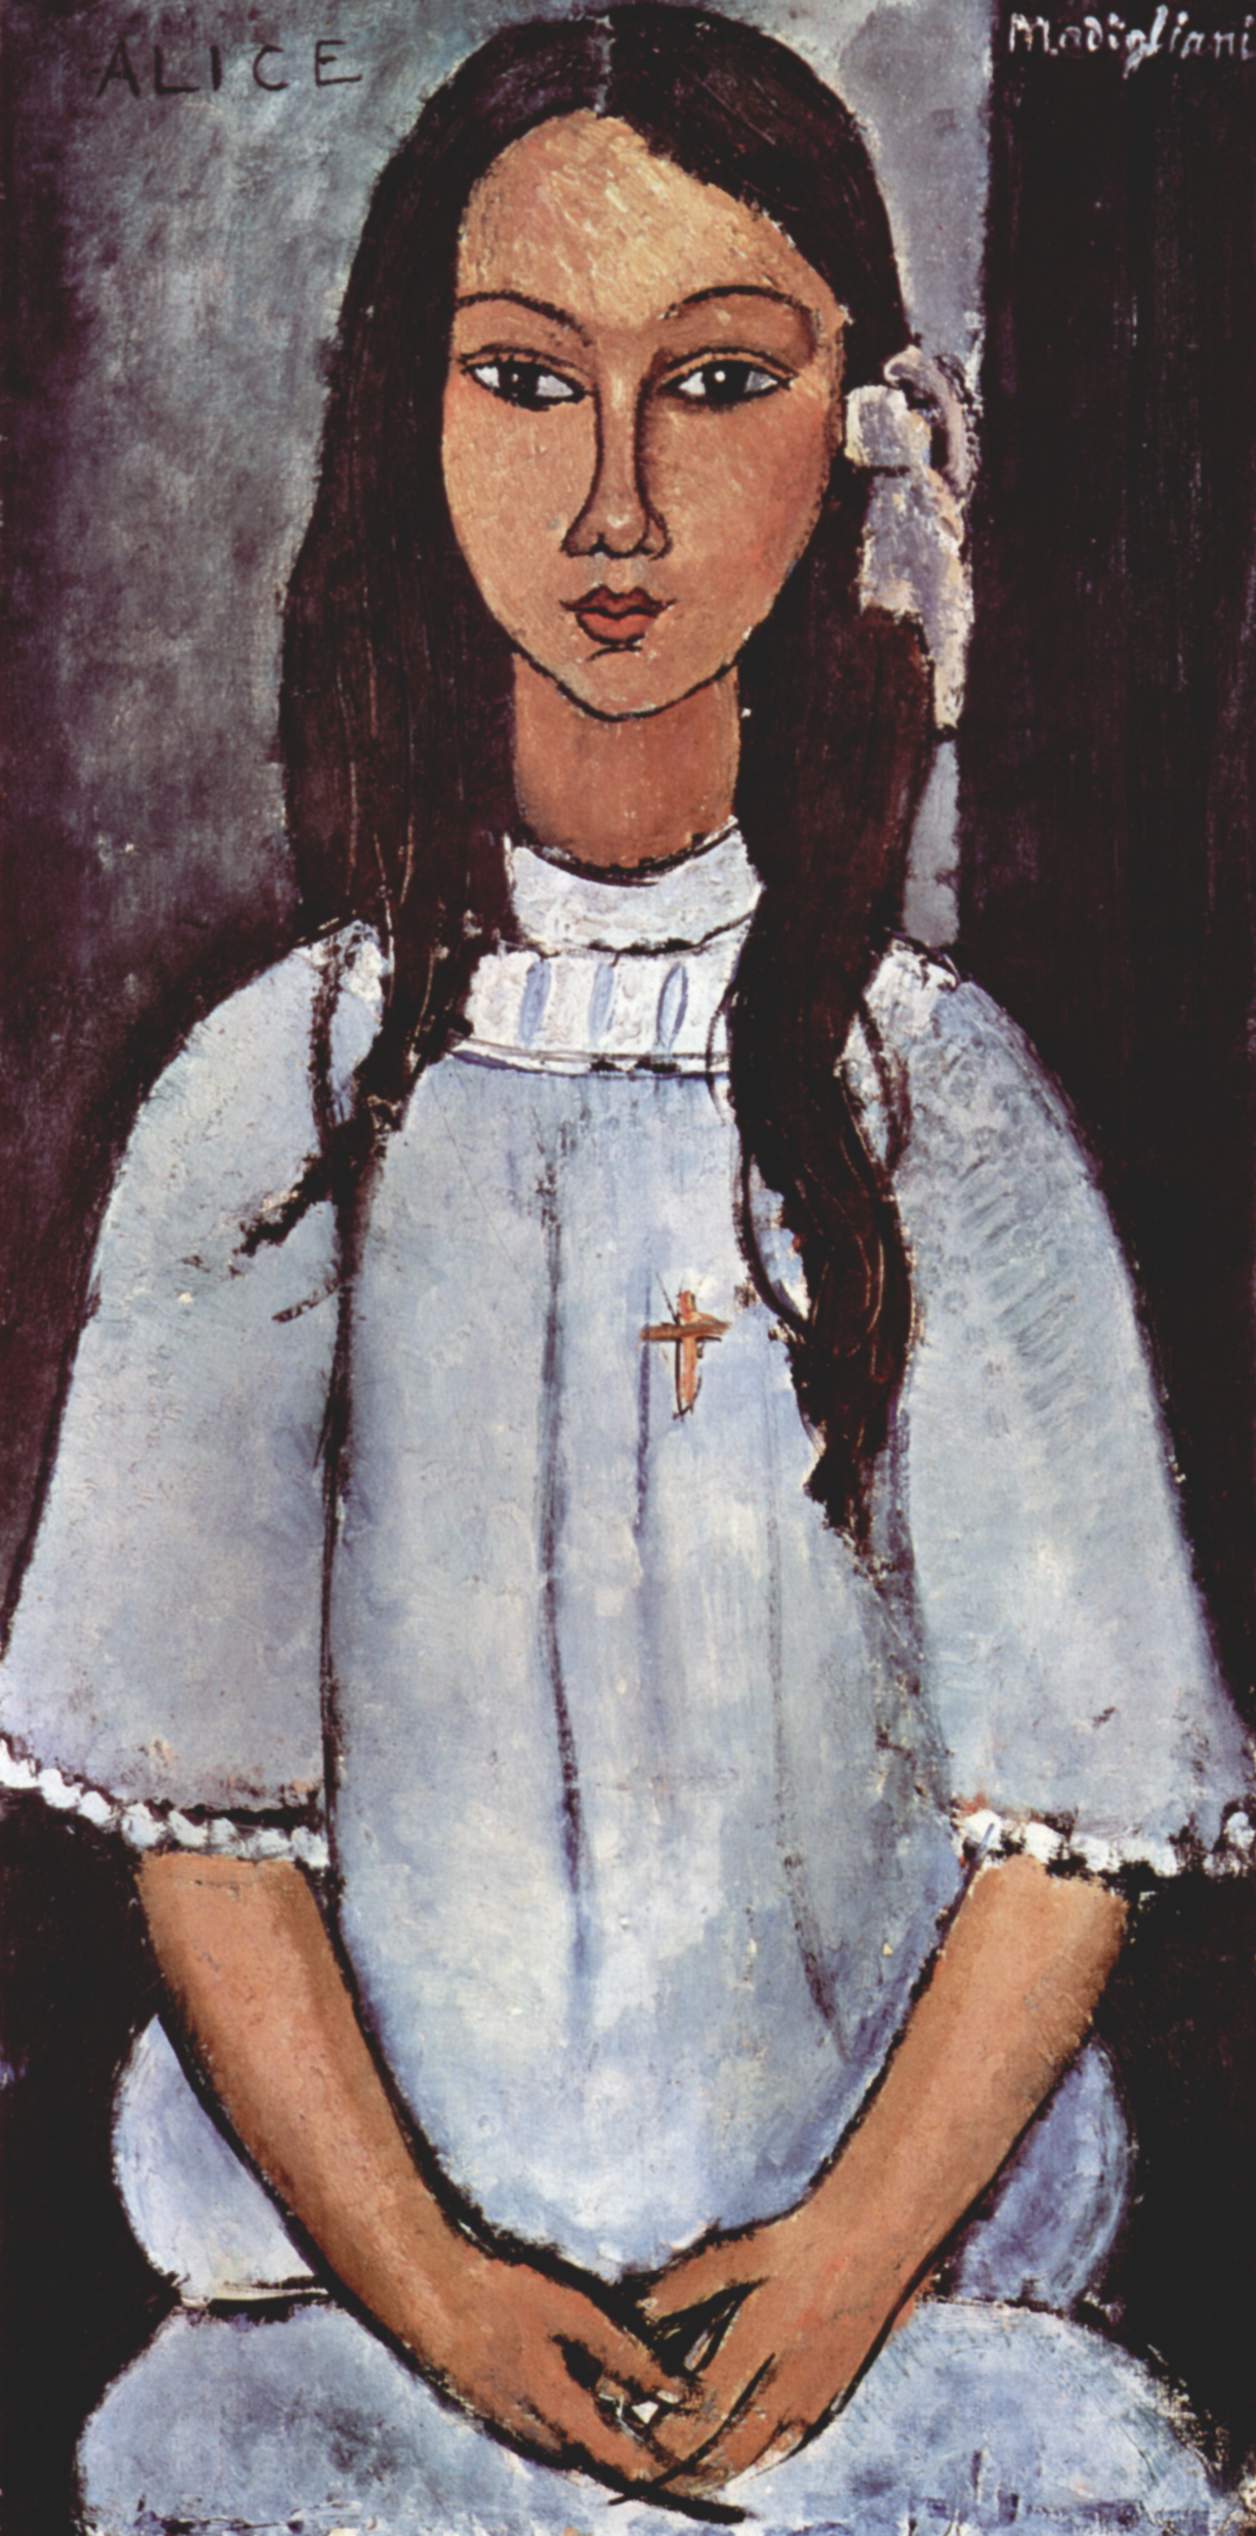 Inspiration: “Alice,” by Amedeo Modigliani